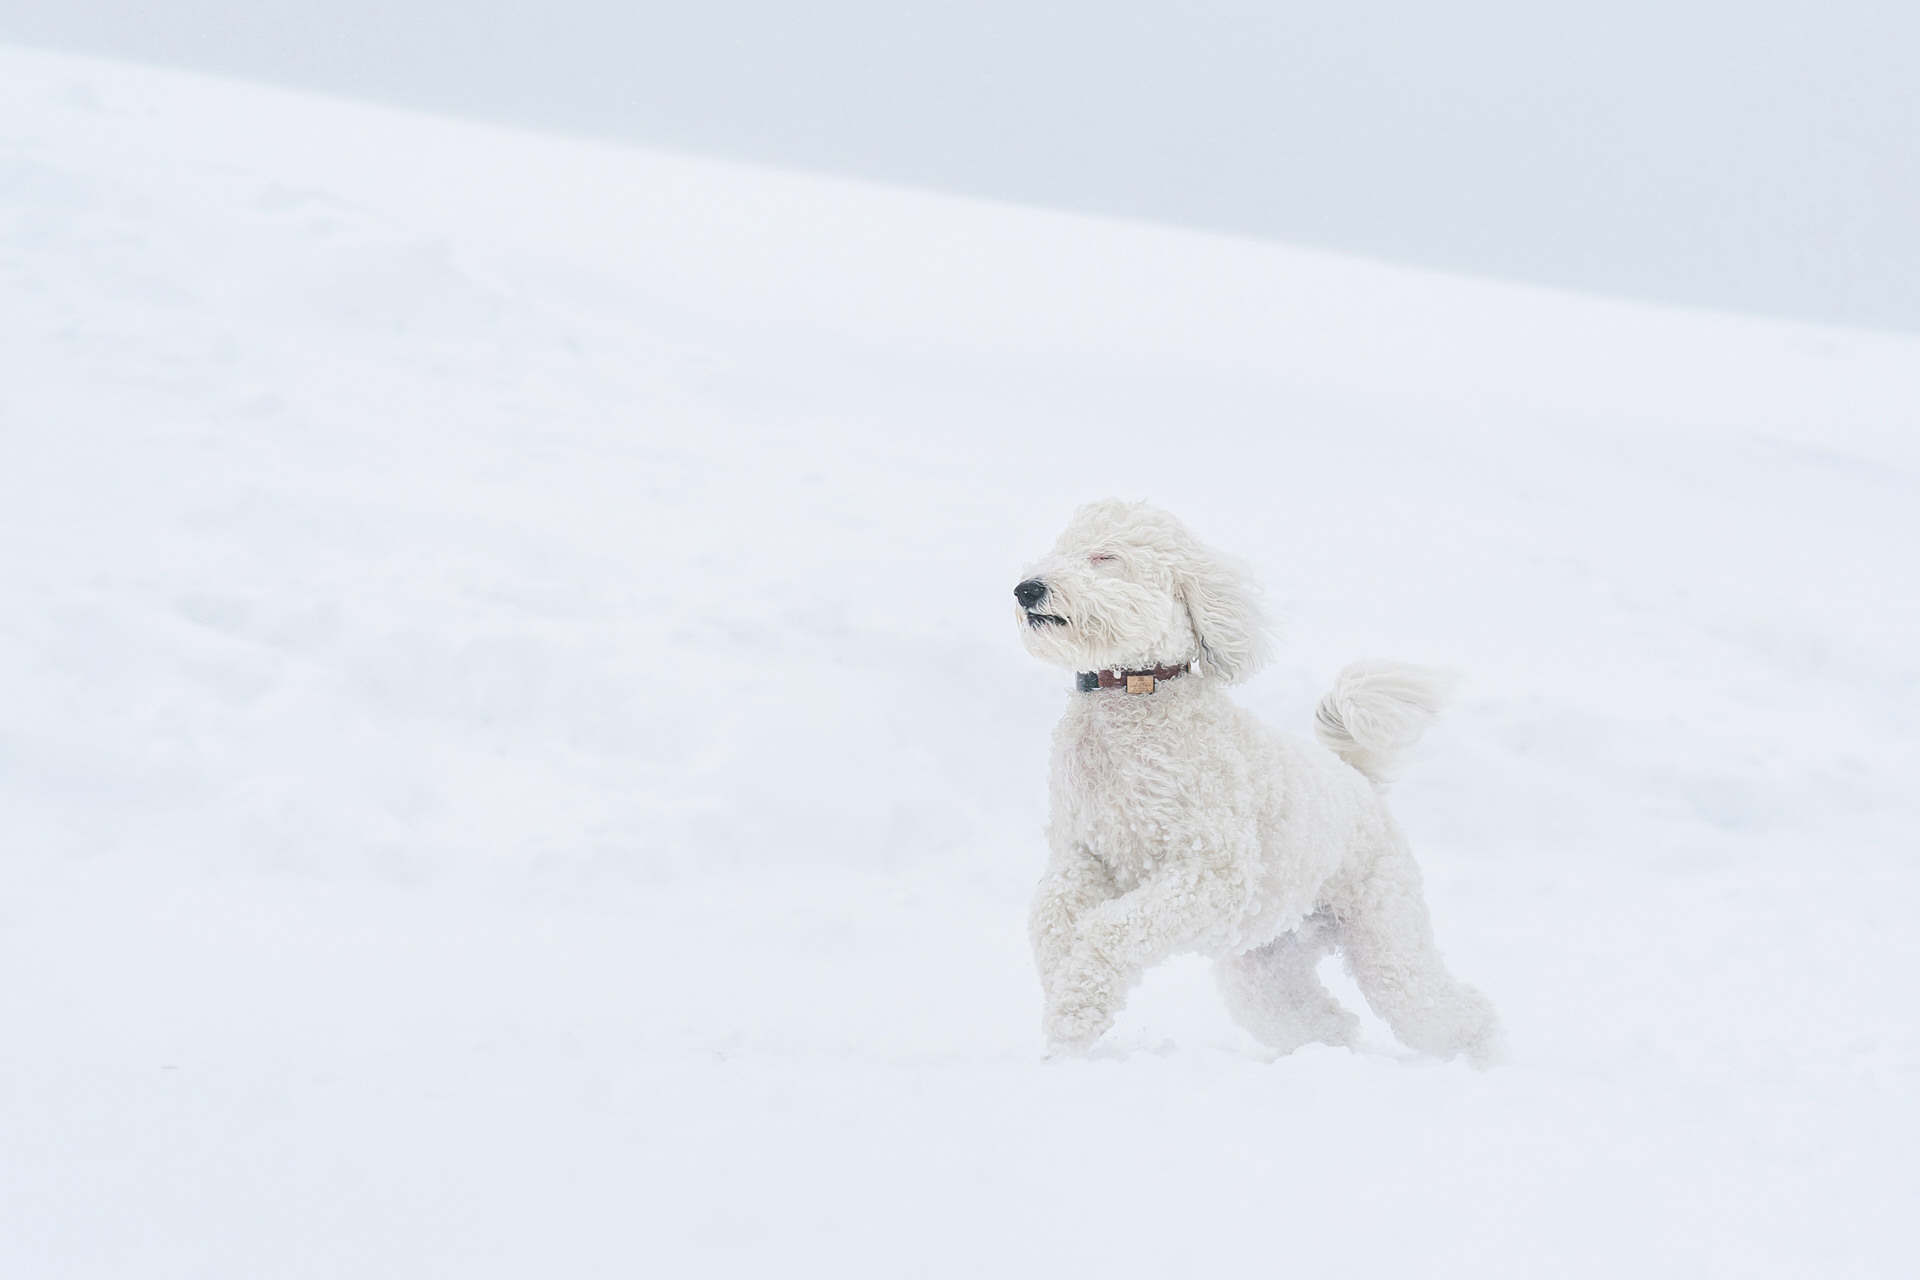 dog runs through the snow in a blizzard